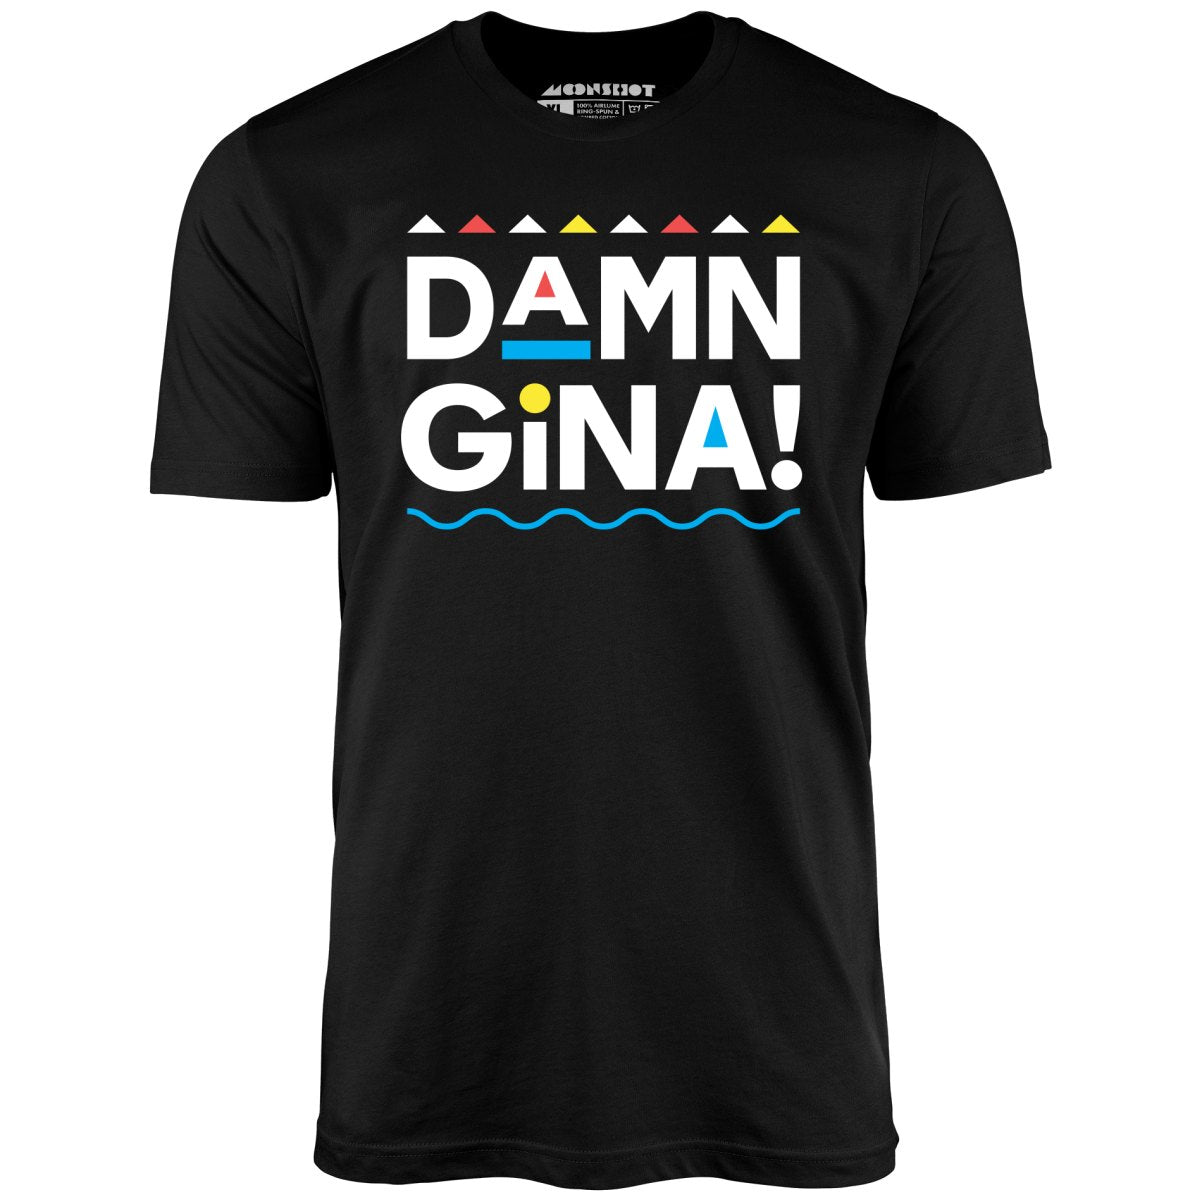 Damn Gina! - Unisex T-Shirt